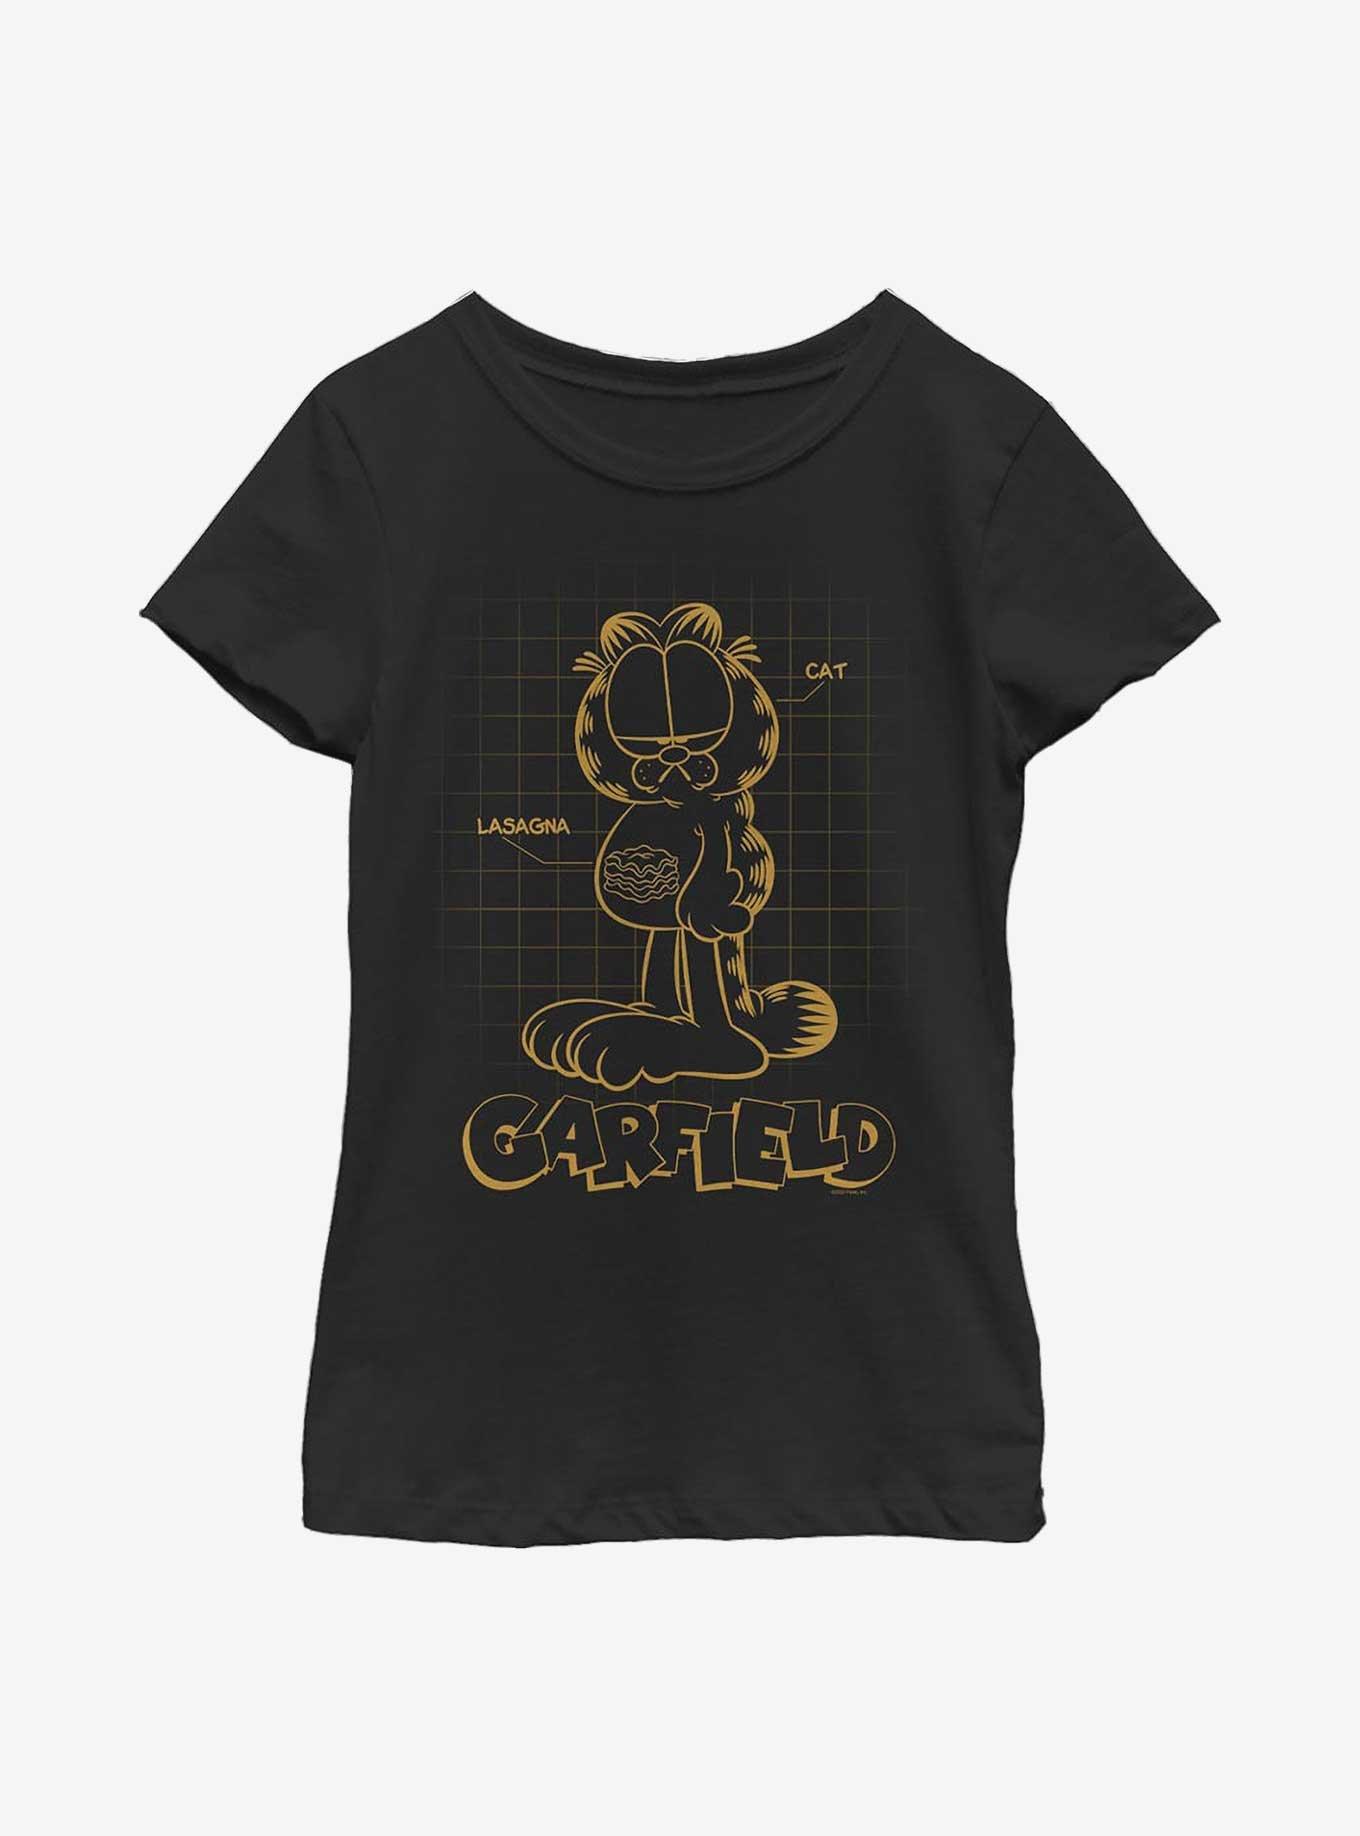 Garfield Cat Schematic Youth Girl's T-Shirt, BLACK, hi-res